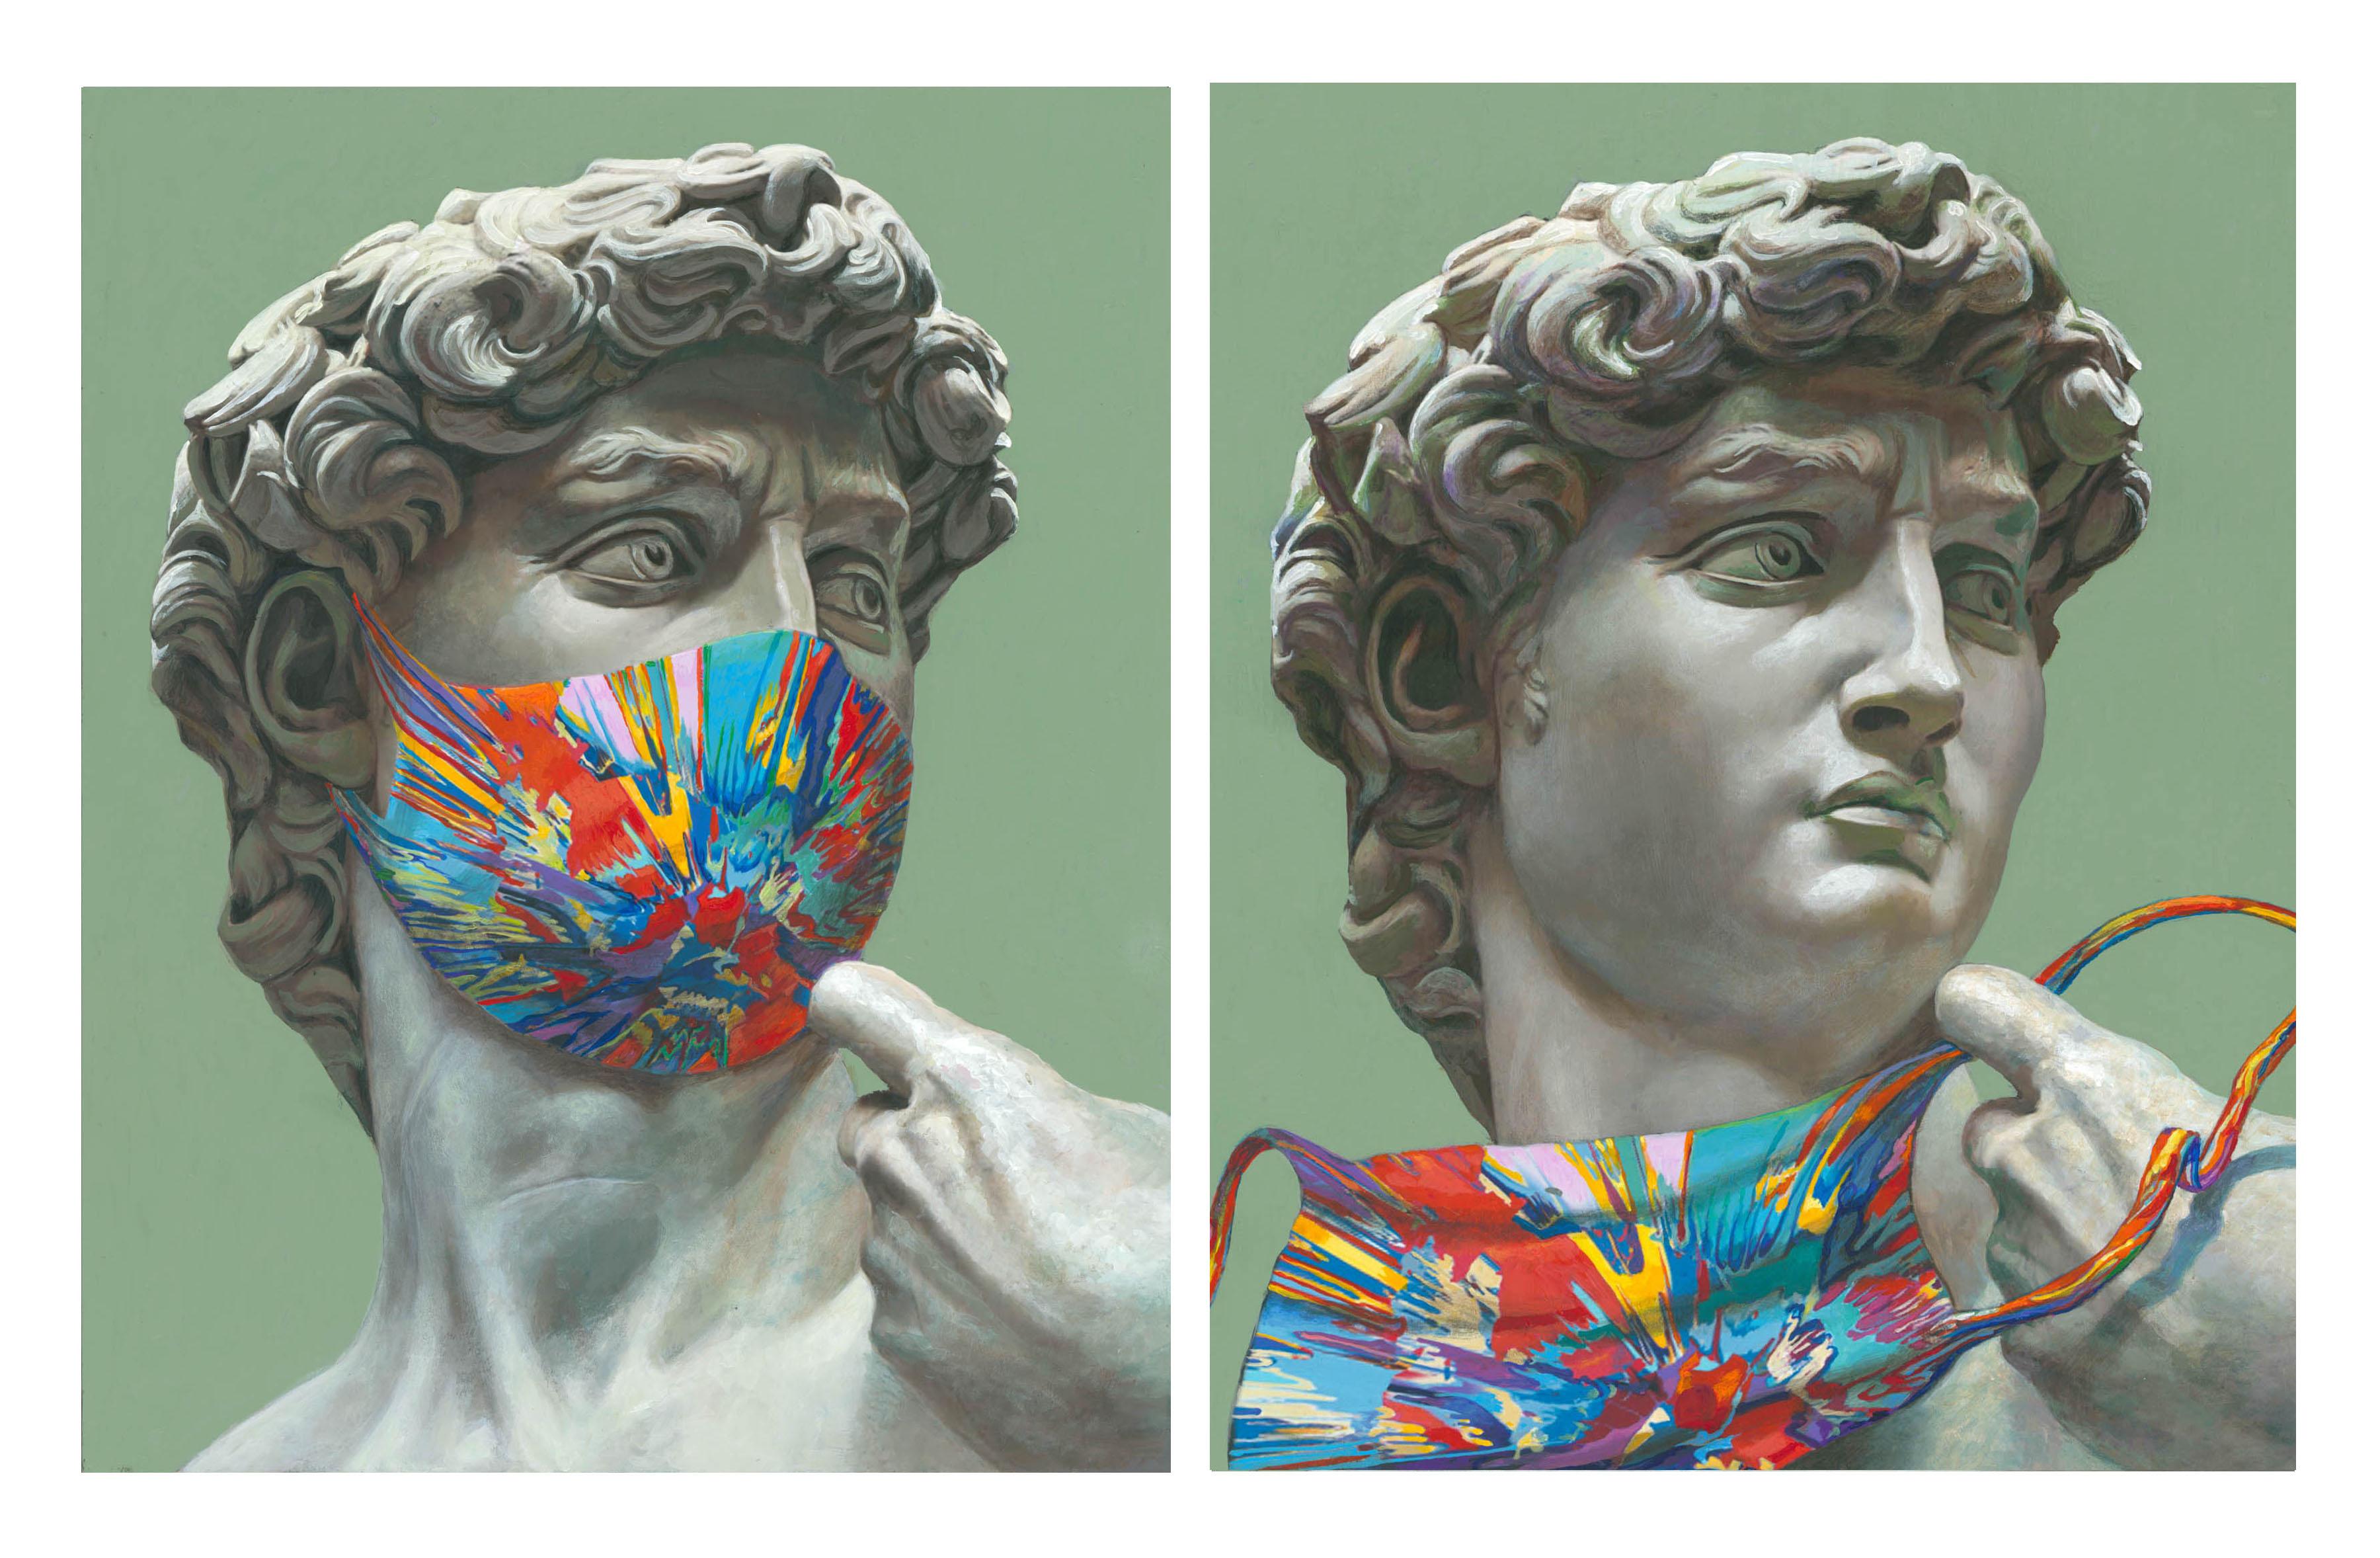 Clement Kamena Portrait Painting - Michelangelo “David” with Damien Hirst’s mask & Unmasked